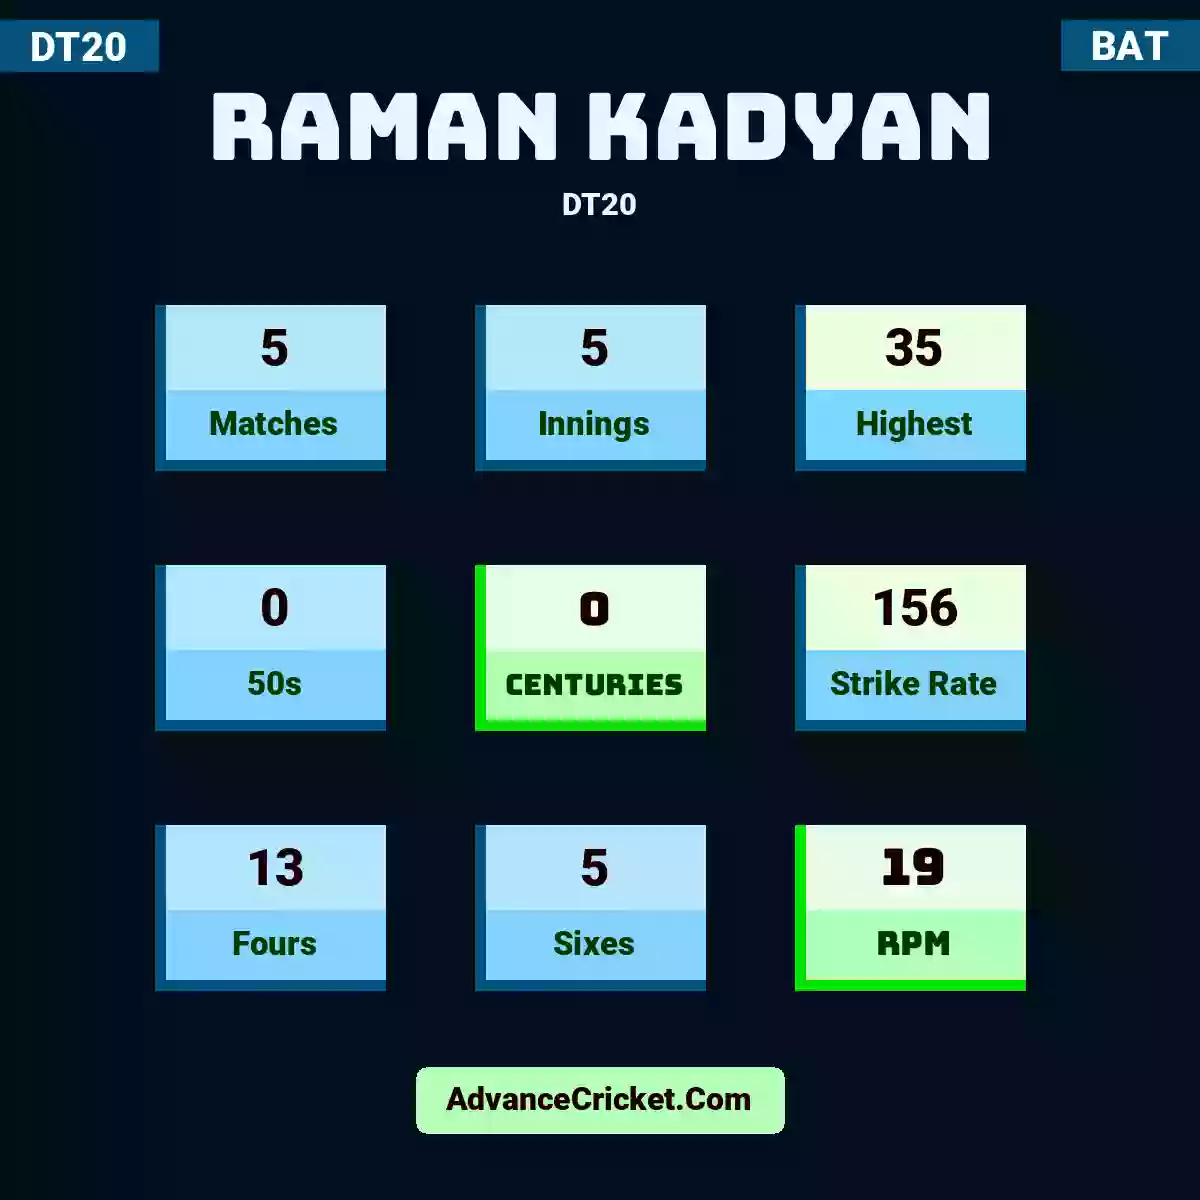 Raman Kadyan DT20 , Raman Kadyan played 5 matches, scored 35 runs as highest, 0 half-centuries, and 0 centuries, with a strike rate of 156. R.Kadyan hit 13 fours and 5 sixes, with an RPM of 19.